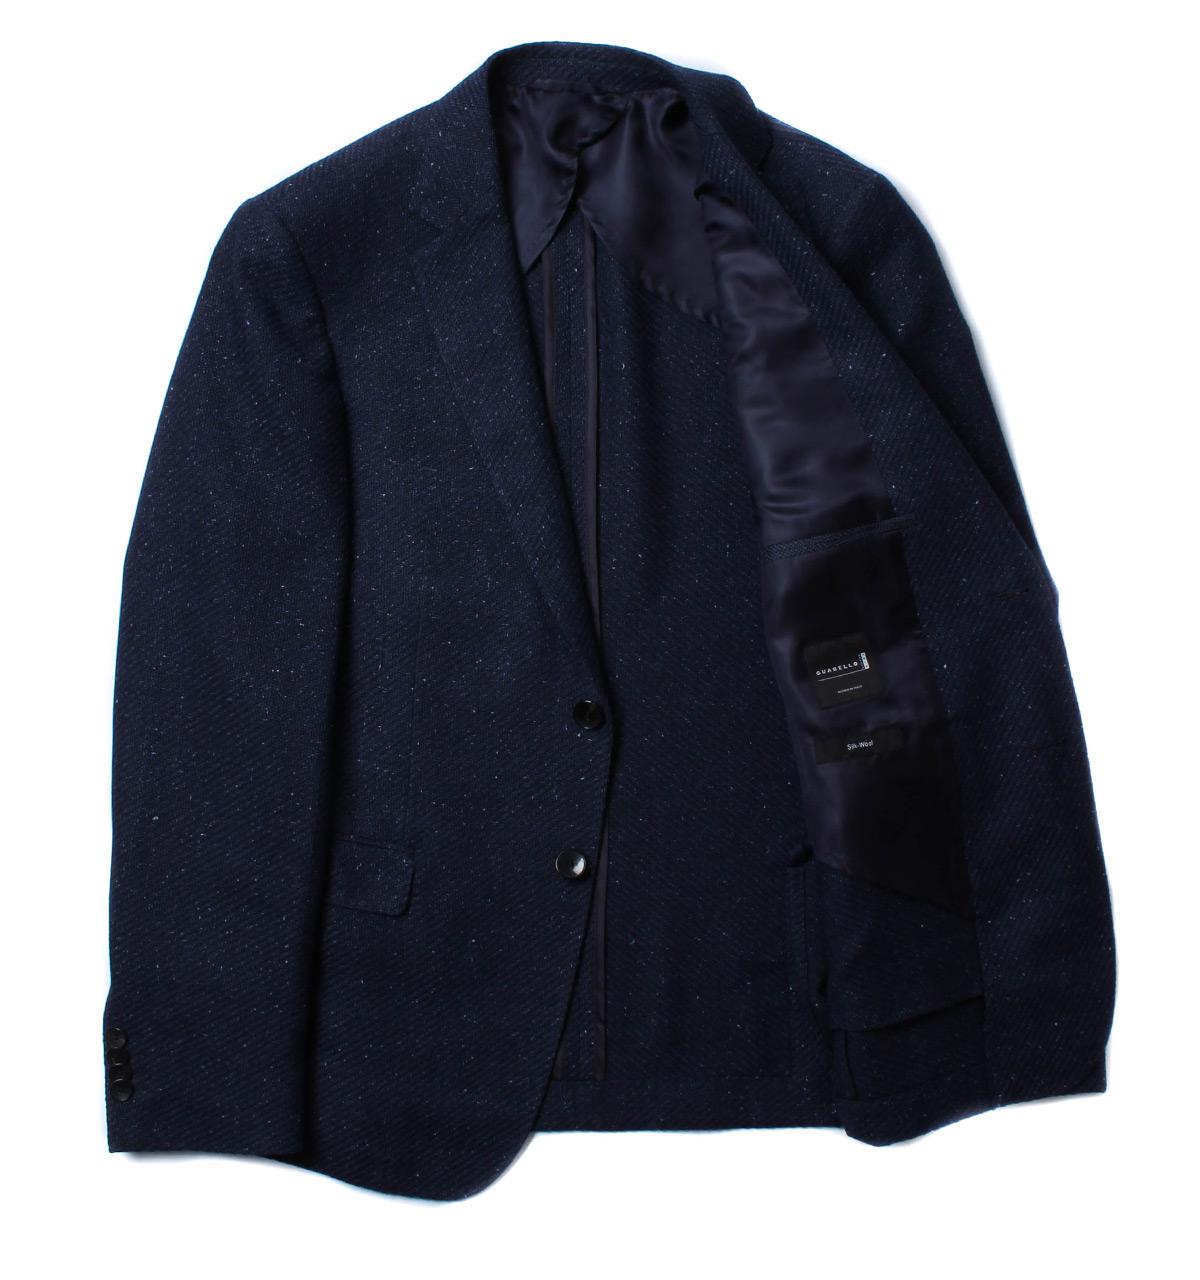 BOSS by Hugo Boss Nobis 4 Navy Woven Wool Tailored Fit Jacket in Blue for  Men - Lyst